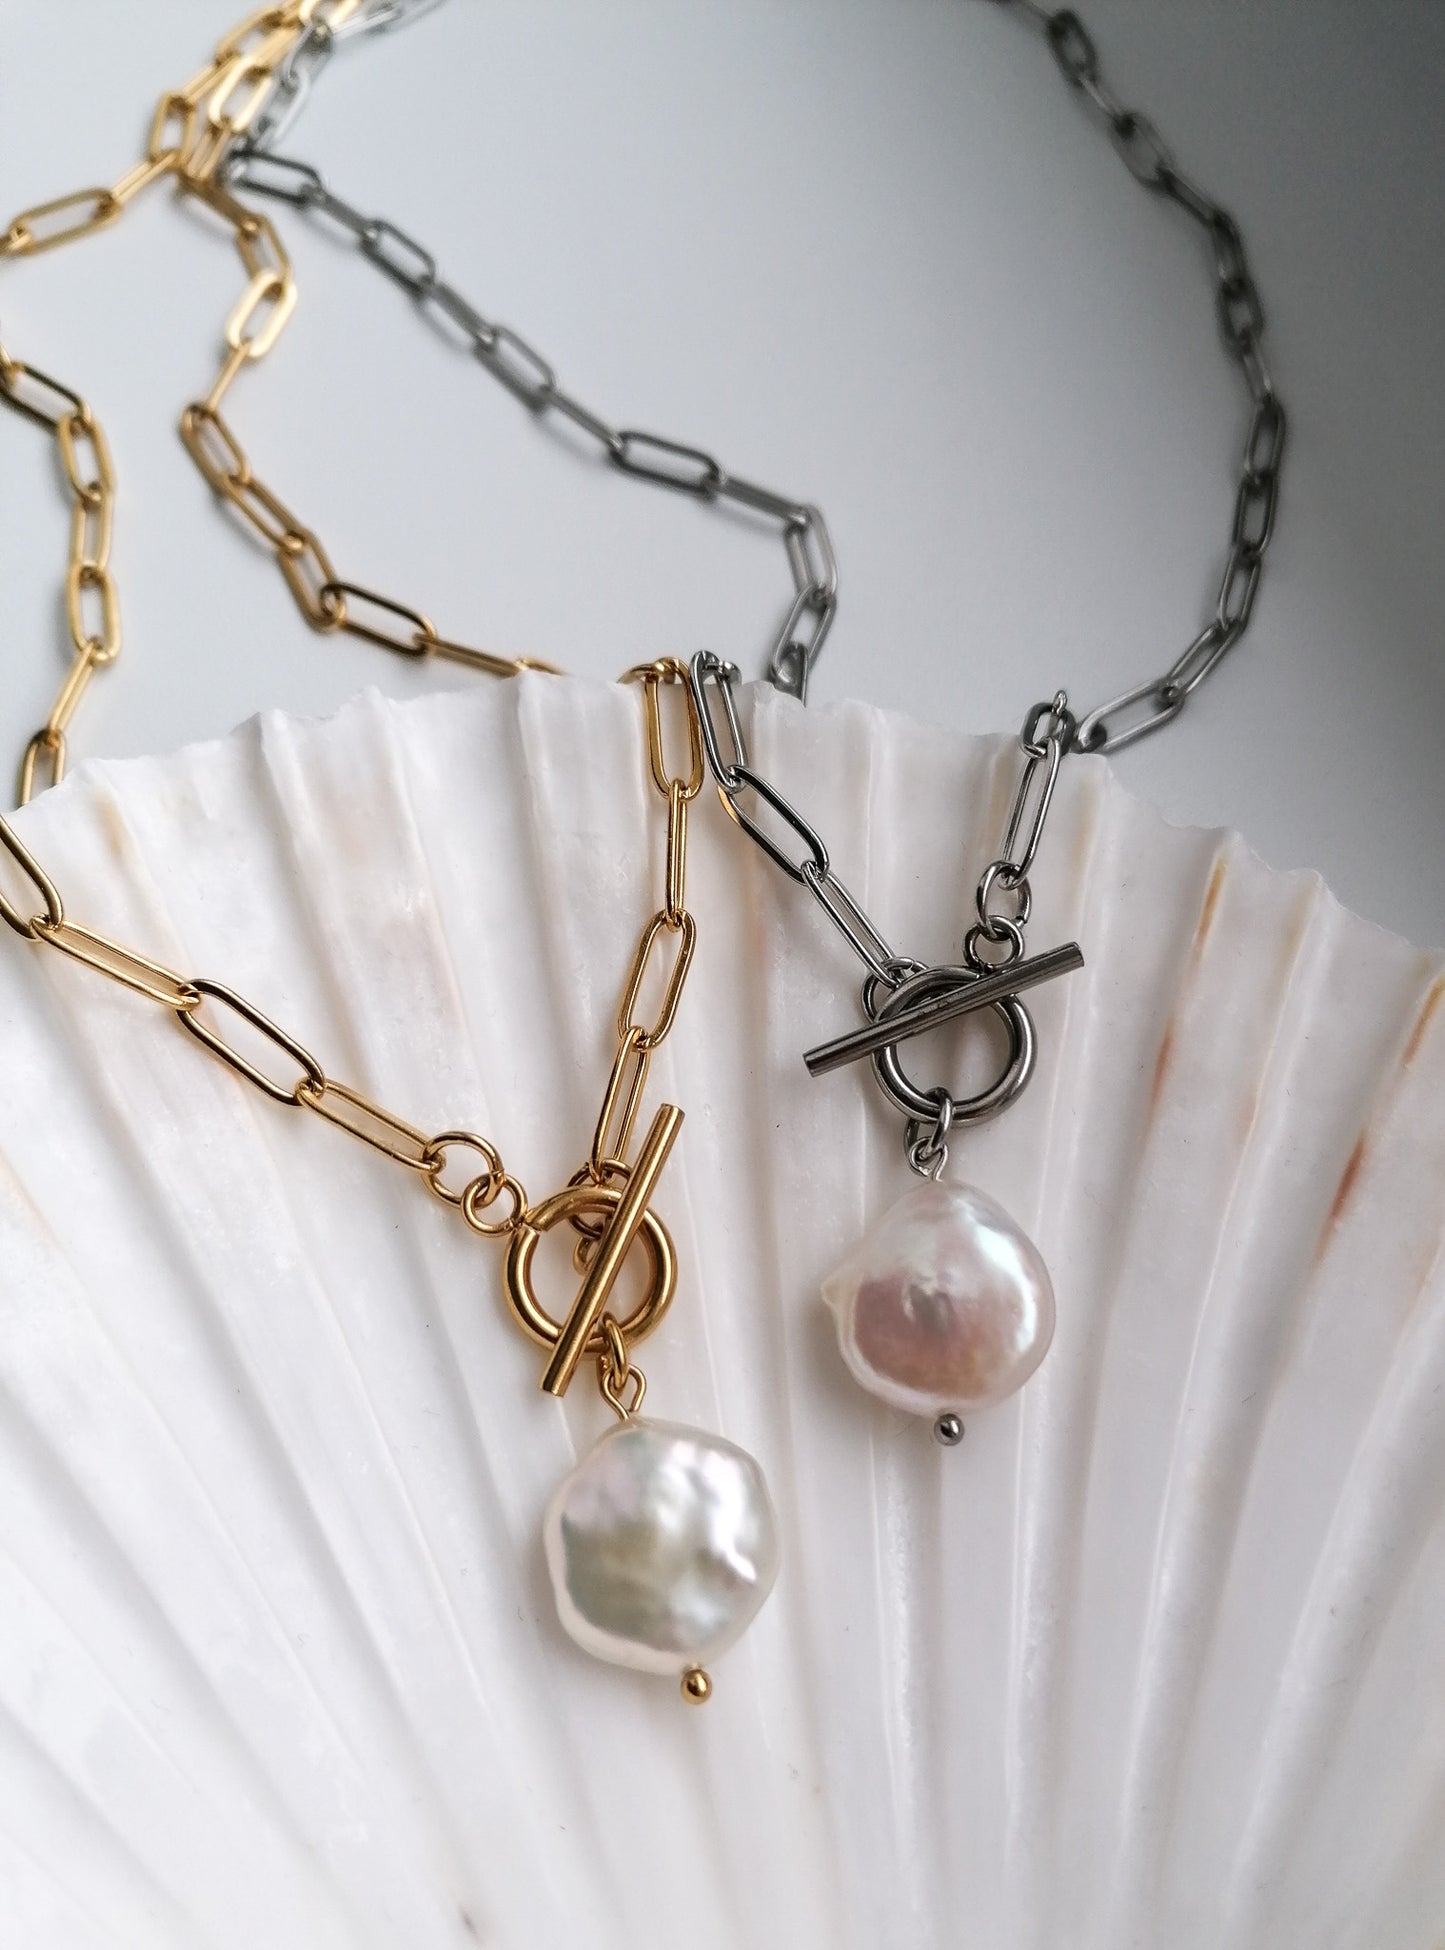 Trinity necklace - silver